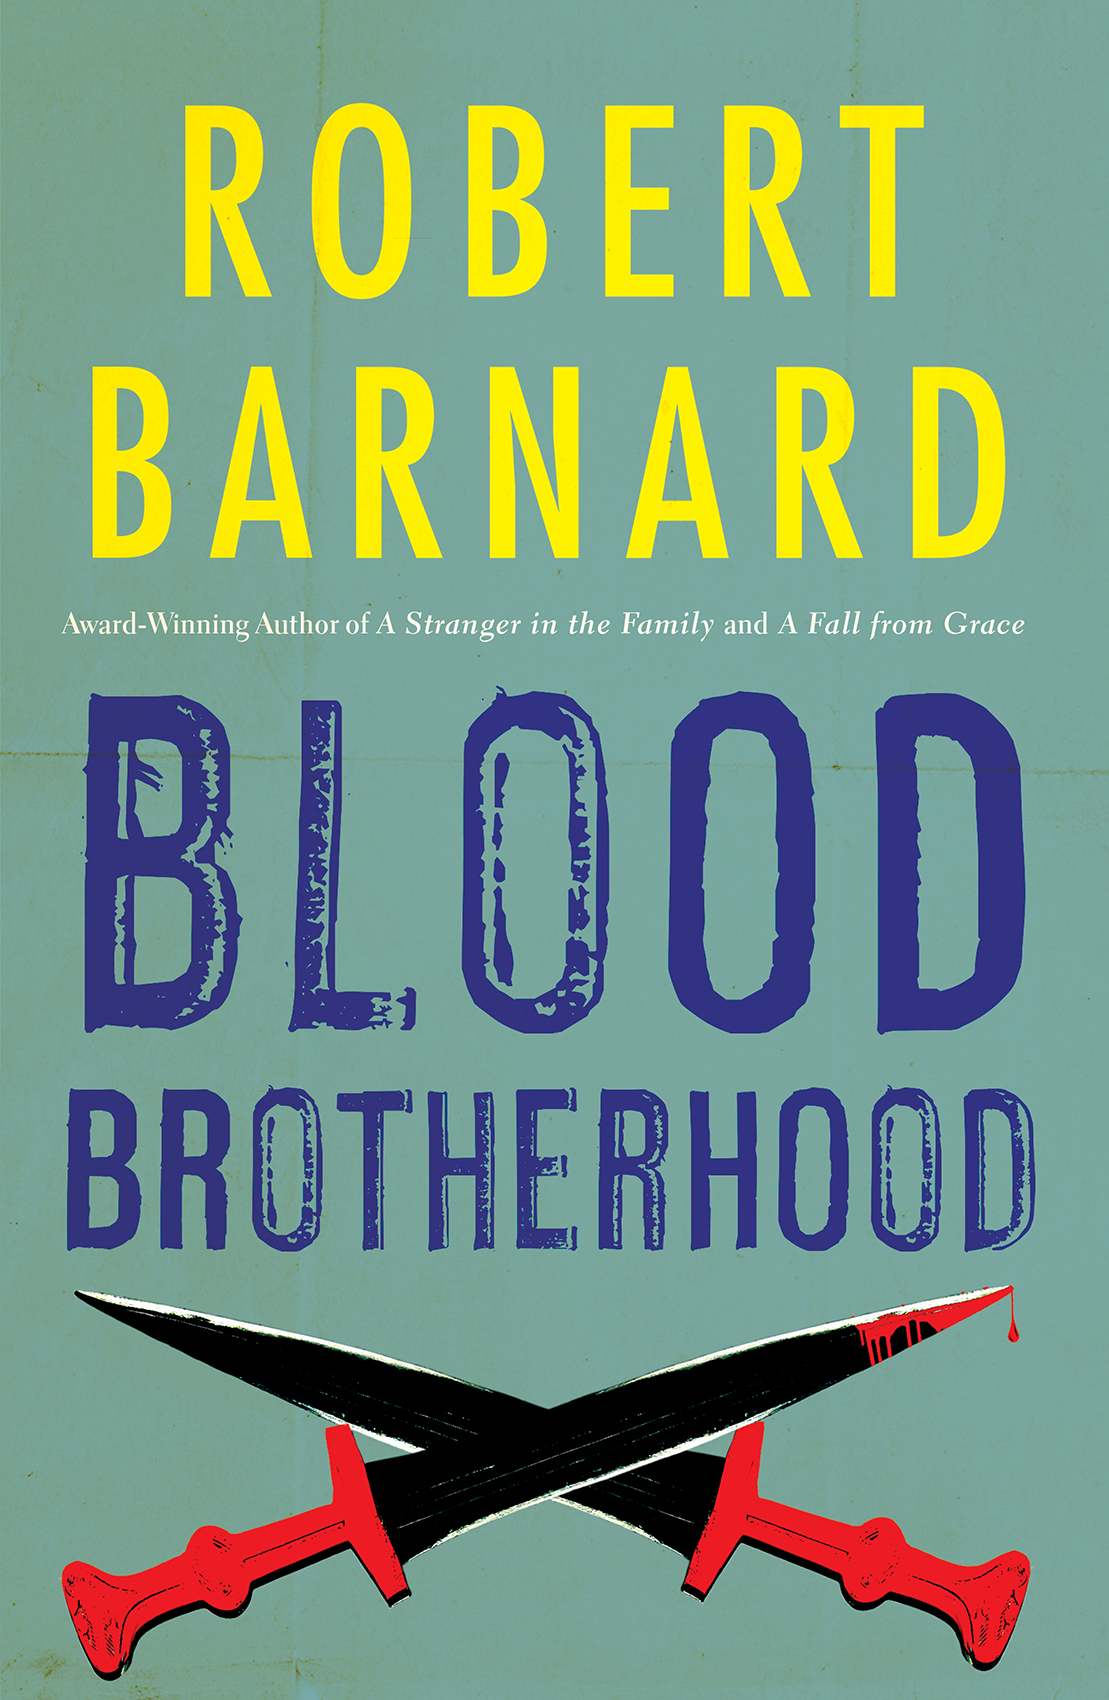 Blood Brotherhood by Robert Barnard